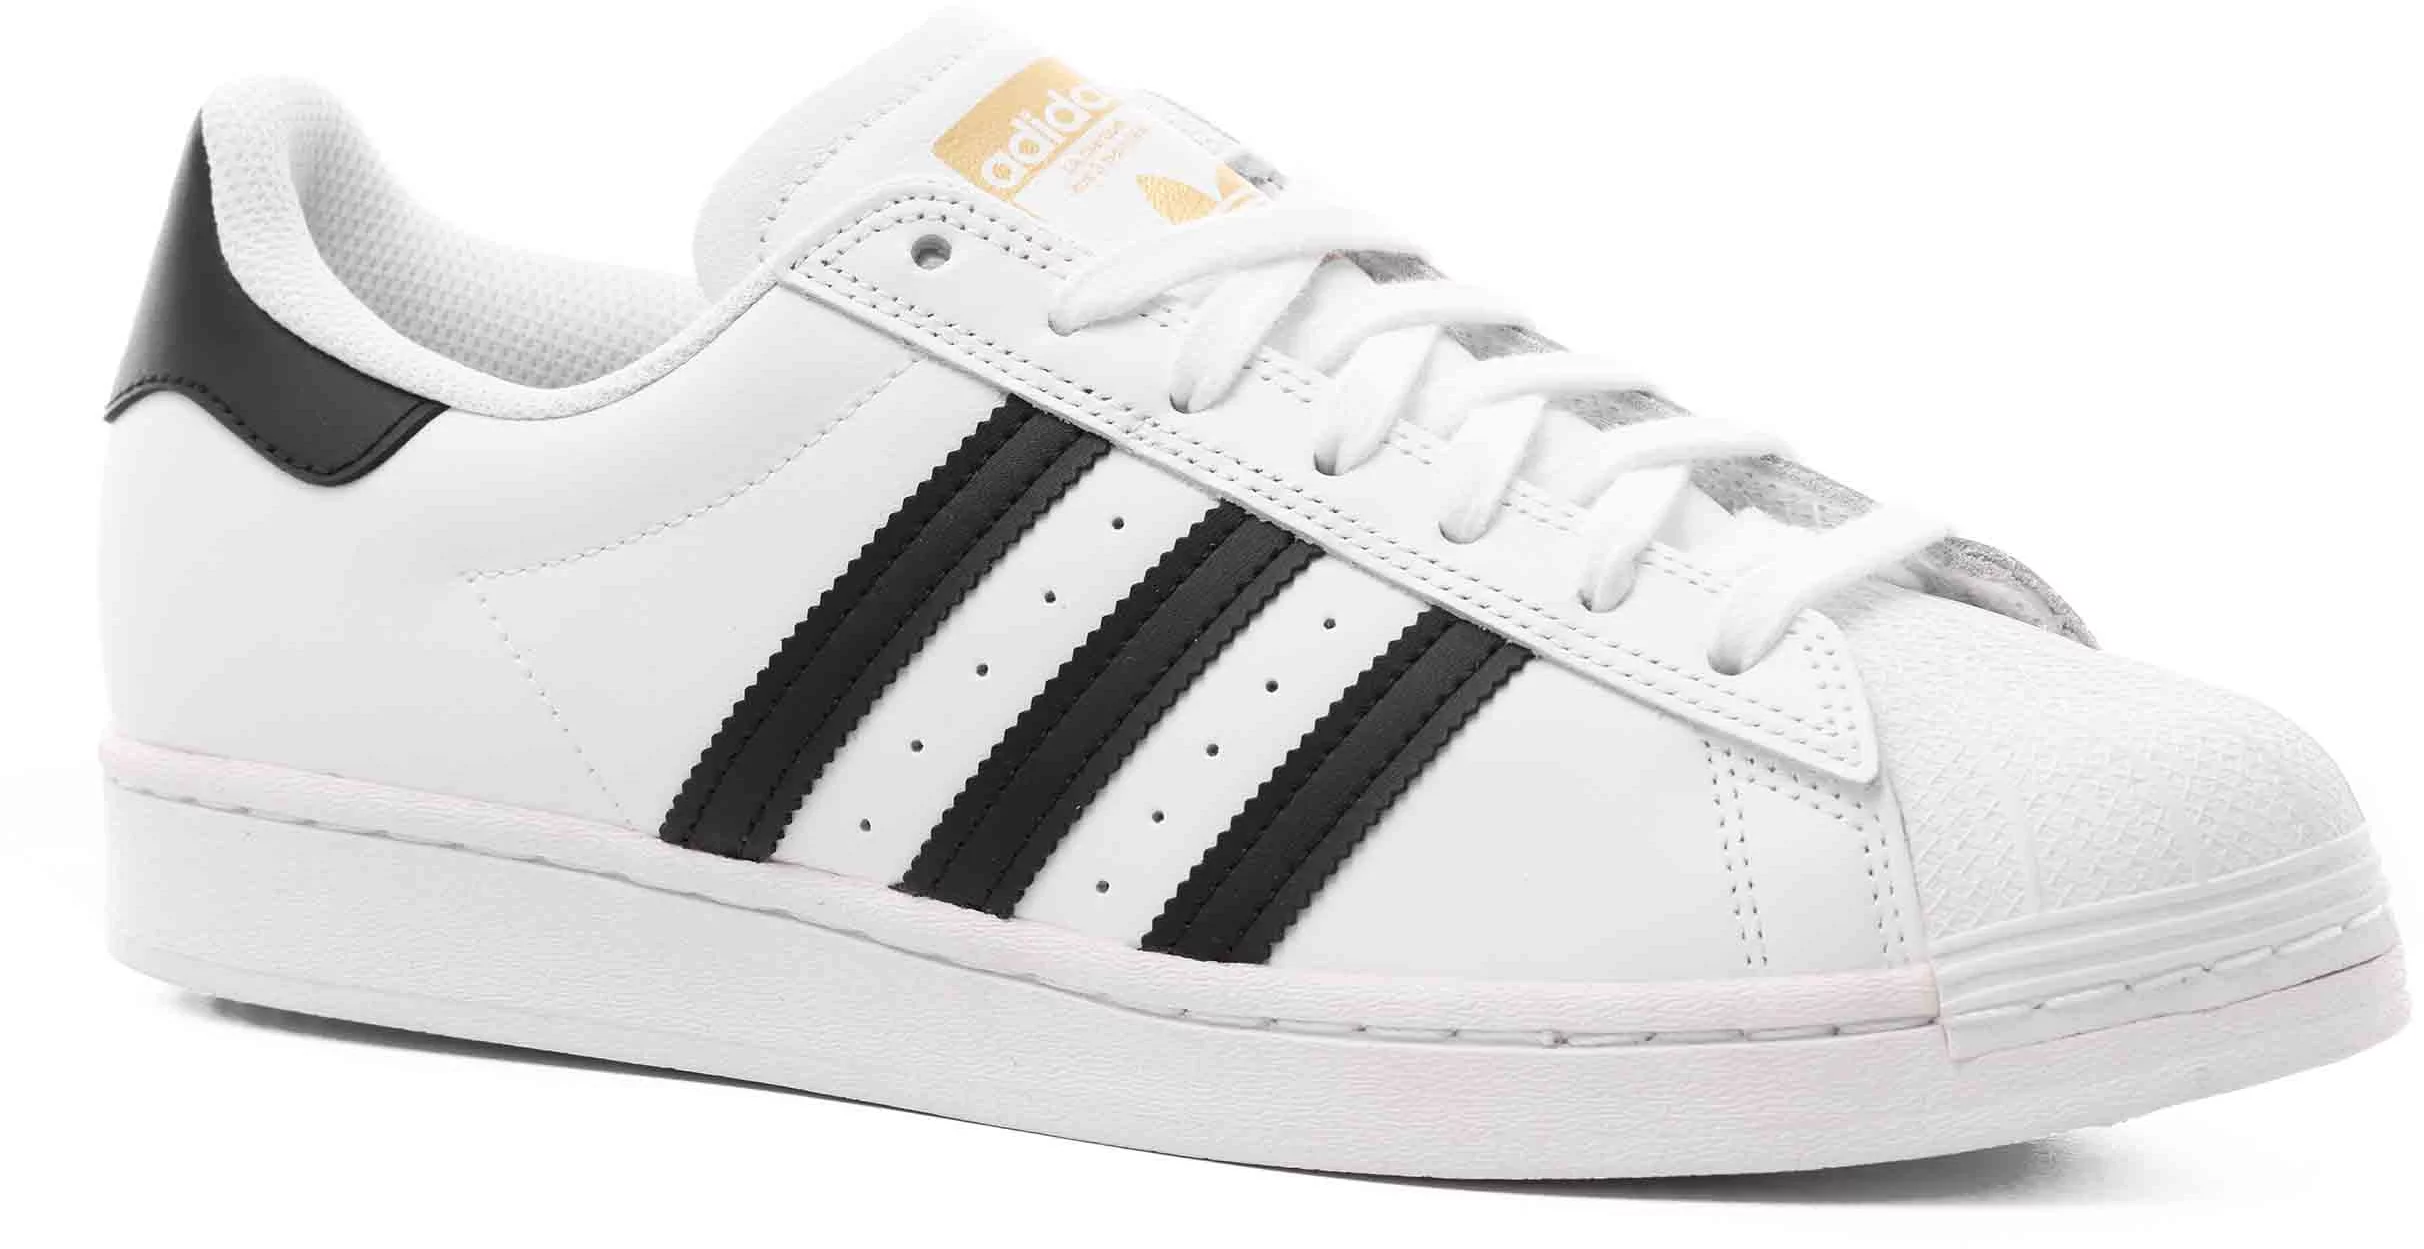 Adidas Superstar ADV Skate Shoes - footwear white/core black/footwear white - Free Shipping Tactics